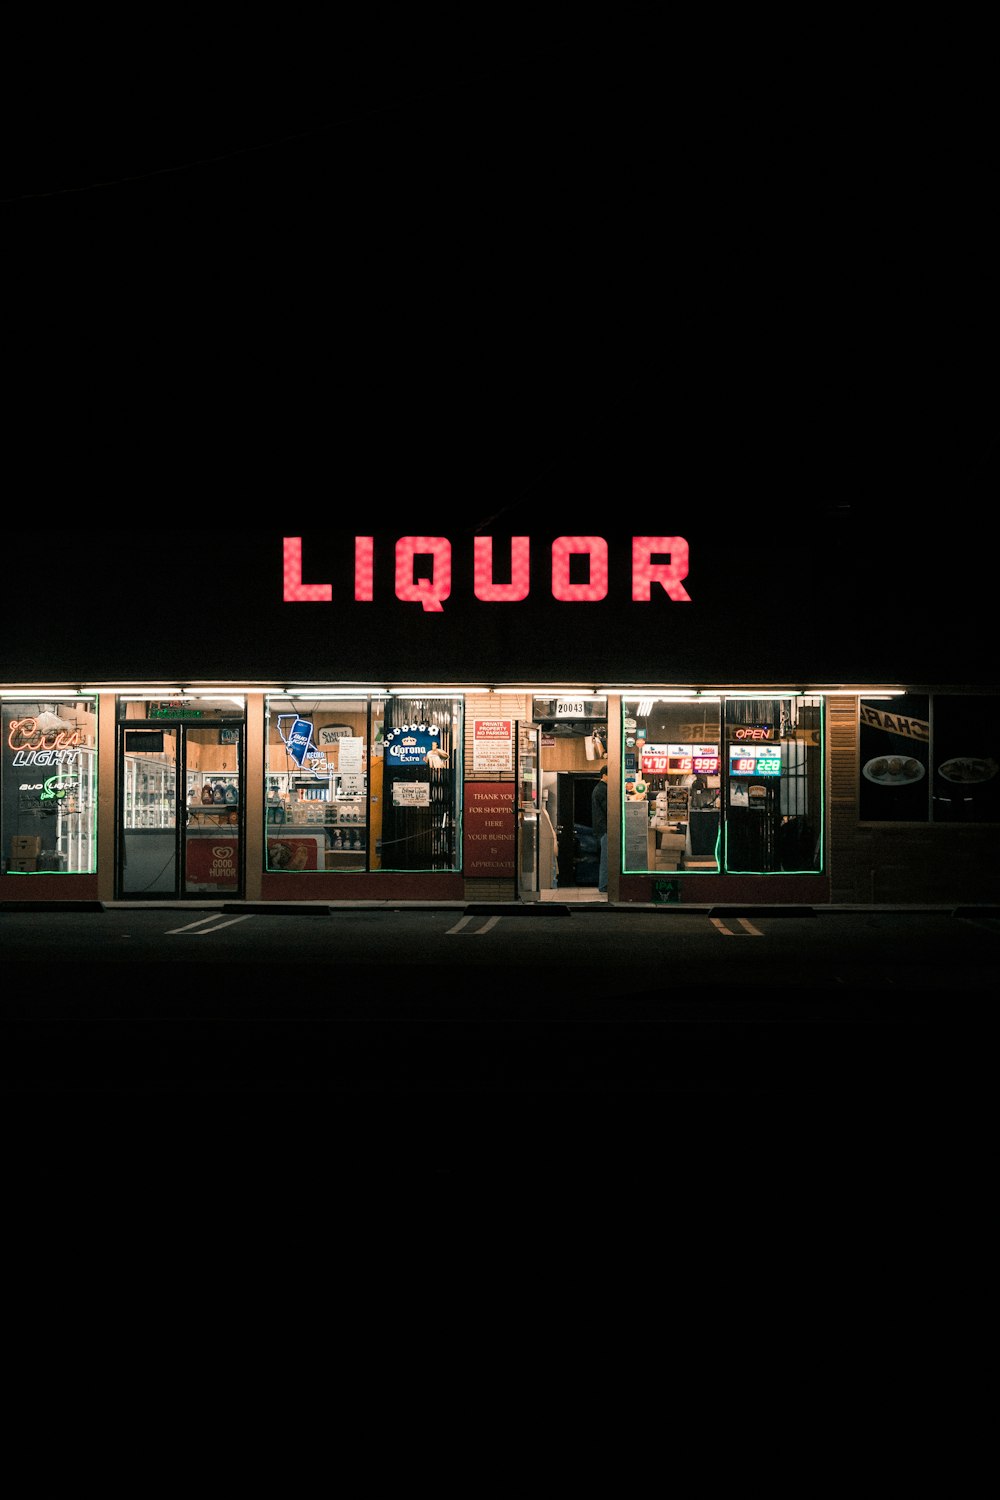 Liquor signage